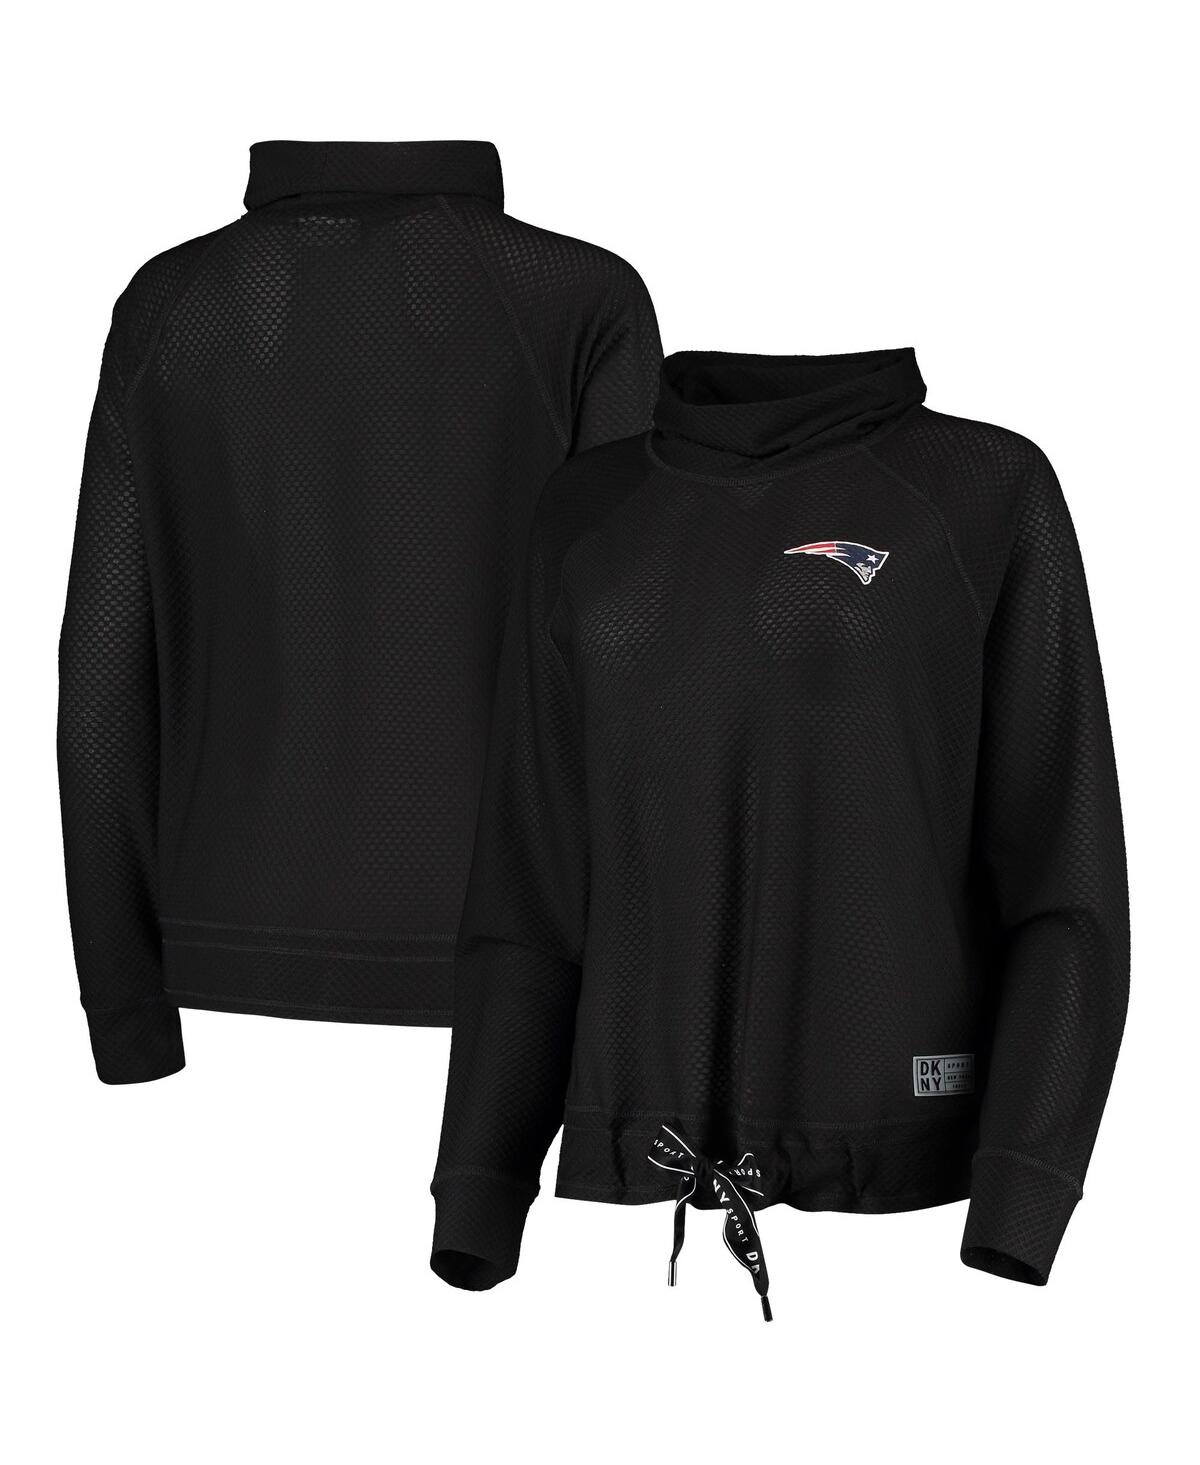 Dkny Women's  Sport Black New England Patriots Gabby Cowl Neck Raglan Mesh Sweatshirt